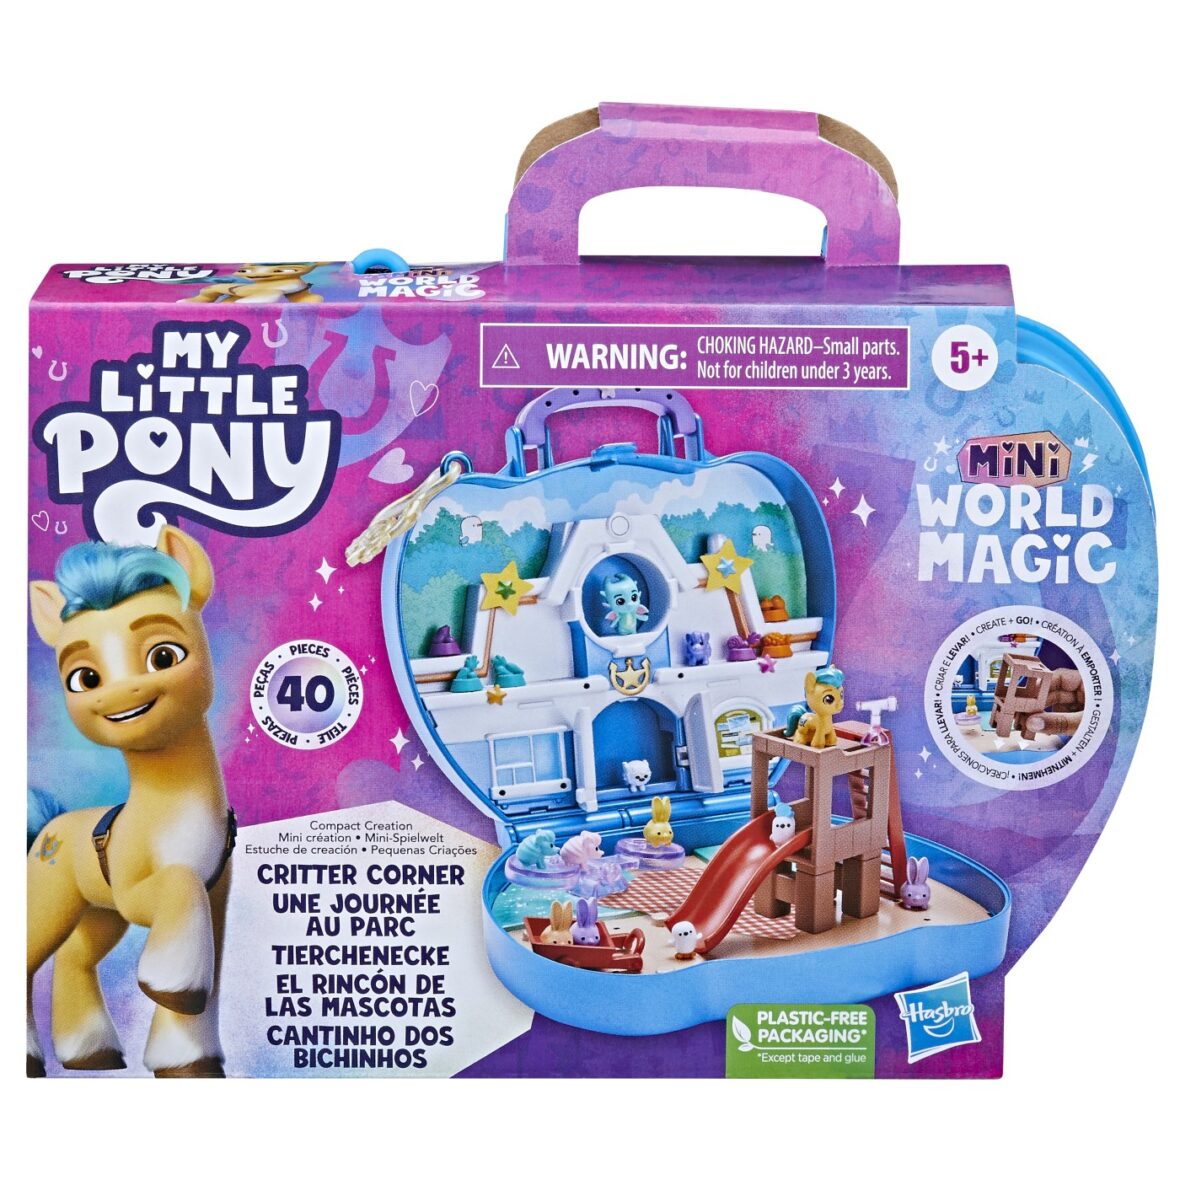 My Little Pony Mini World Magic Set De Joaca Compact Creation Critter Corner